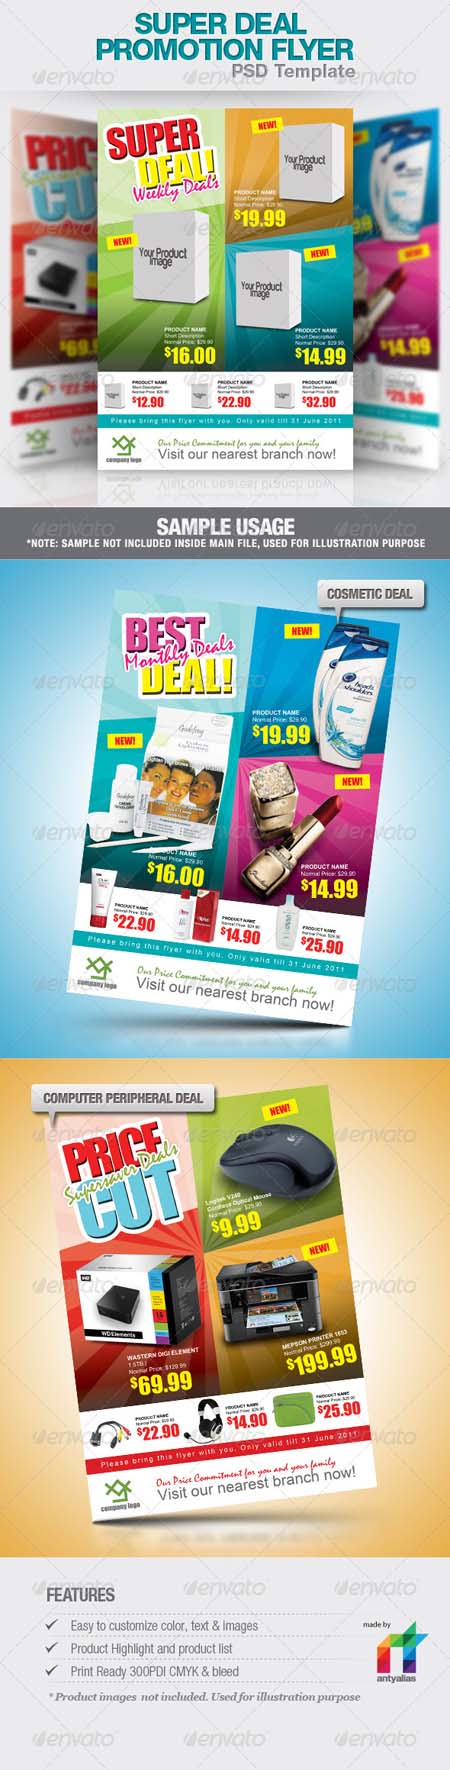 Graphicriver - Super Deal Promotion Flyer Template